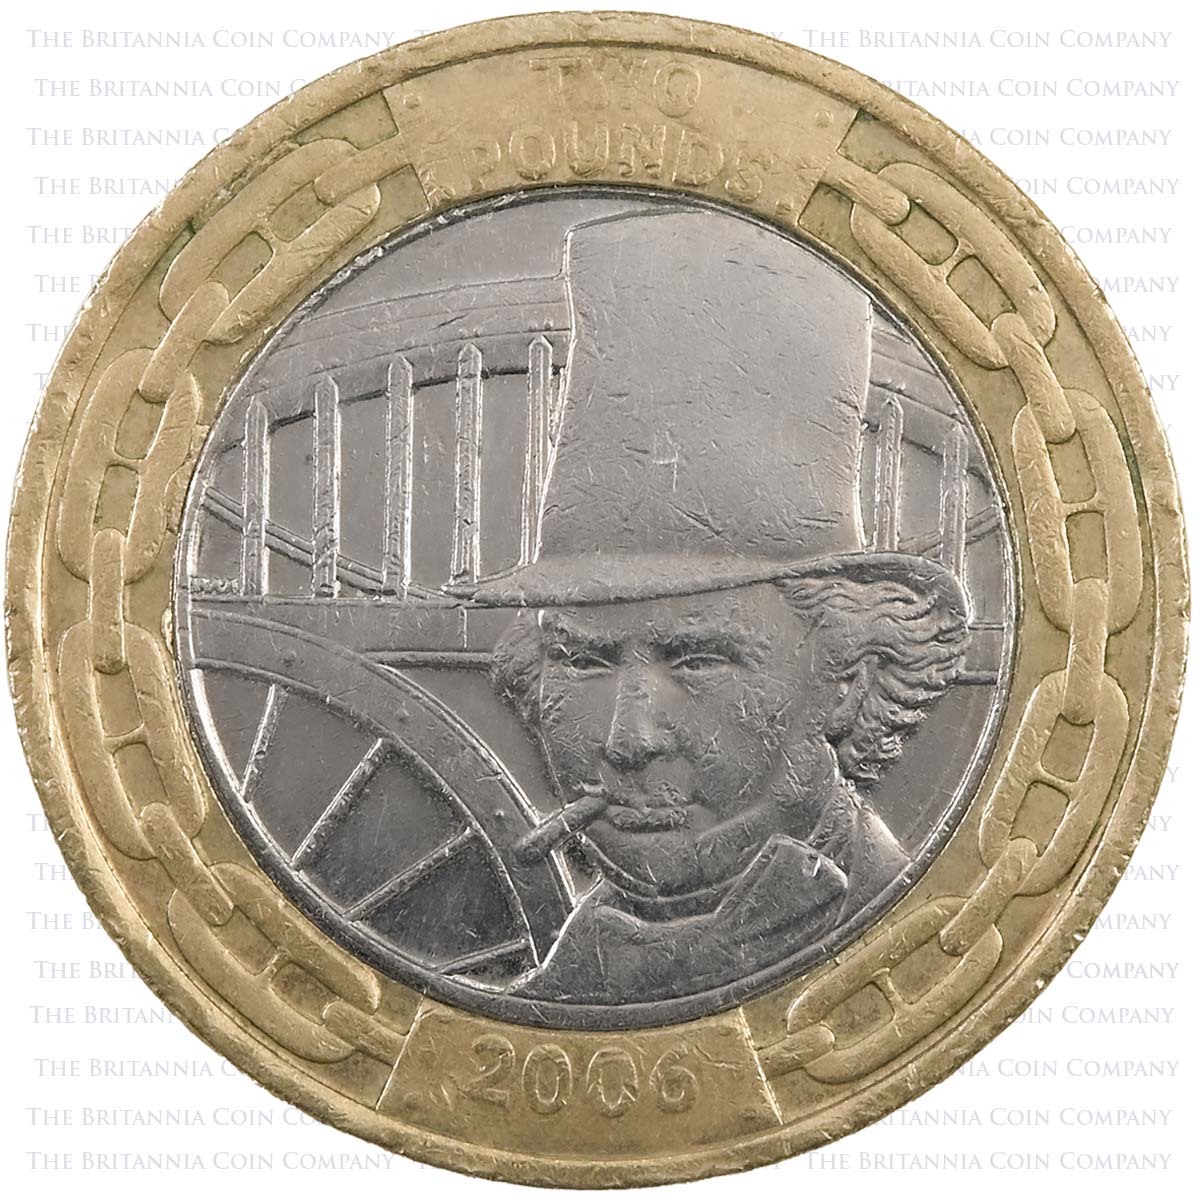 Coin Checker - Brunel £2 Coins